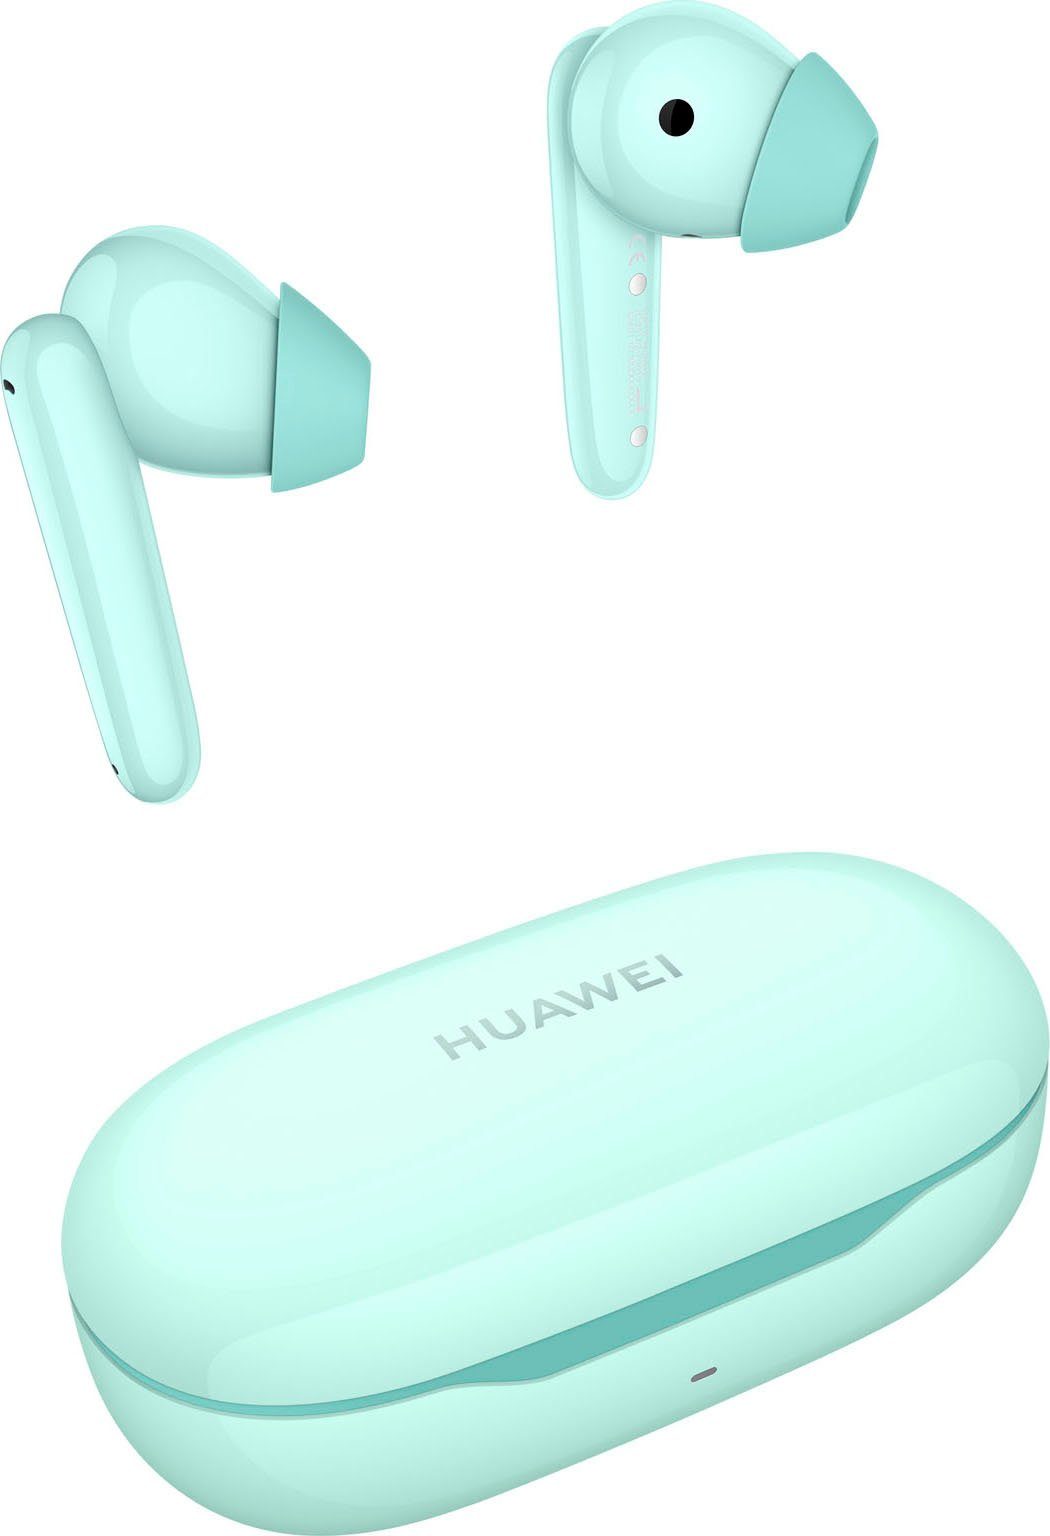 Lange Akkulaufzeit) Kristallklarer In-Ear-Kopfhörer Huawei wireless (Premium-Design, Blau SE FreeBuds Sound,